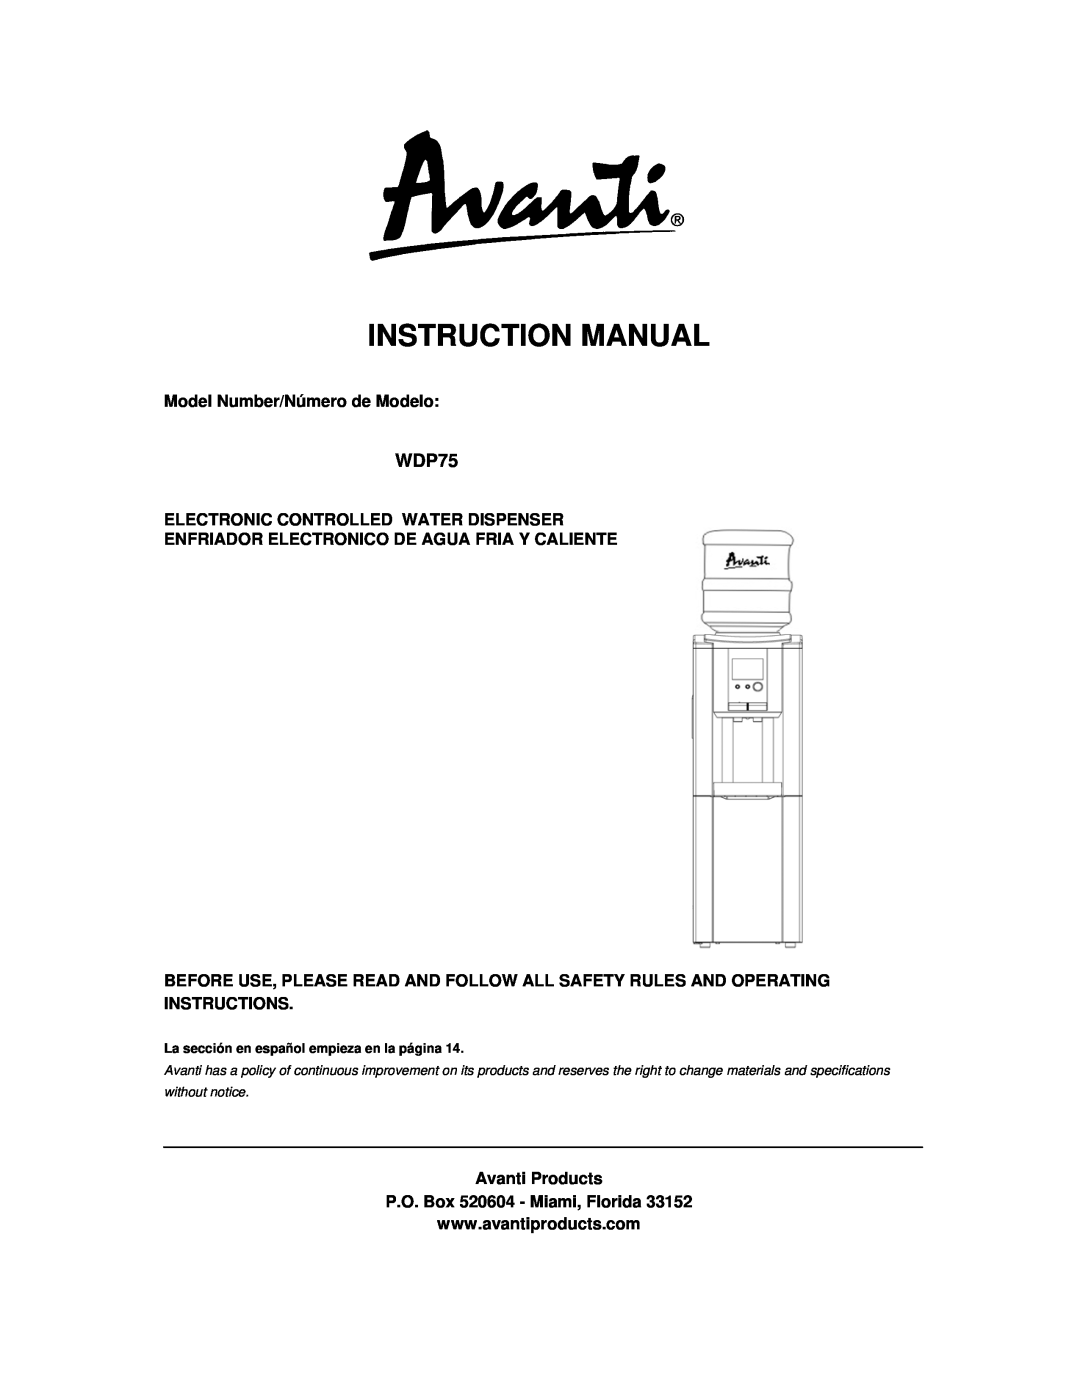 Avanti WDP75 instruction manual Model Number/Número de Modelo, Electronic Controlled Water Dispenser 